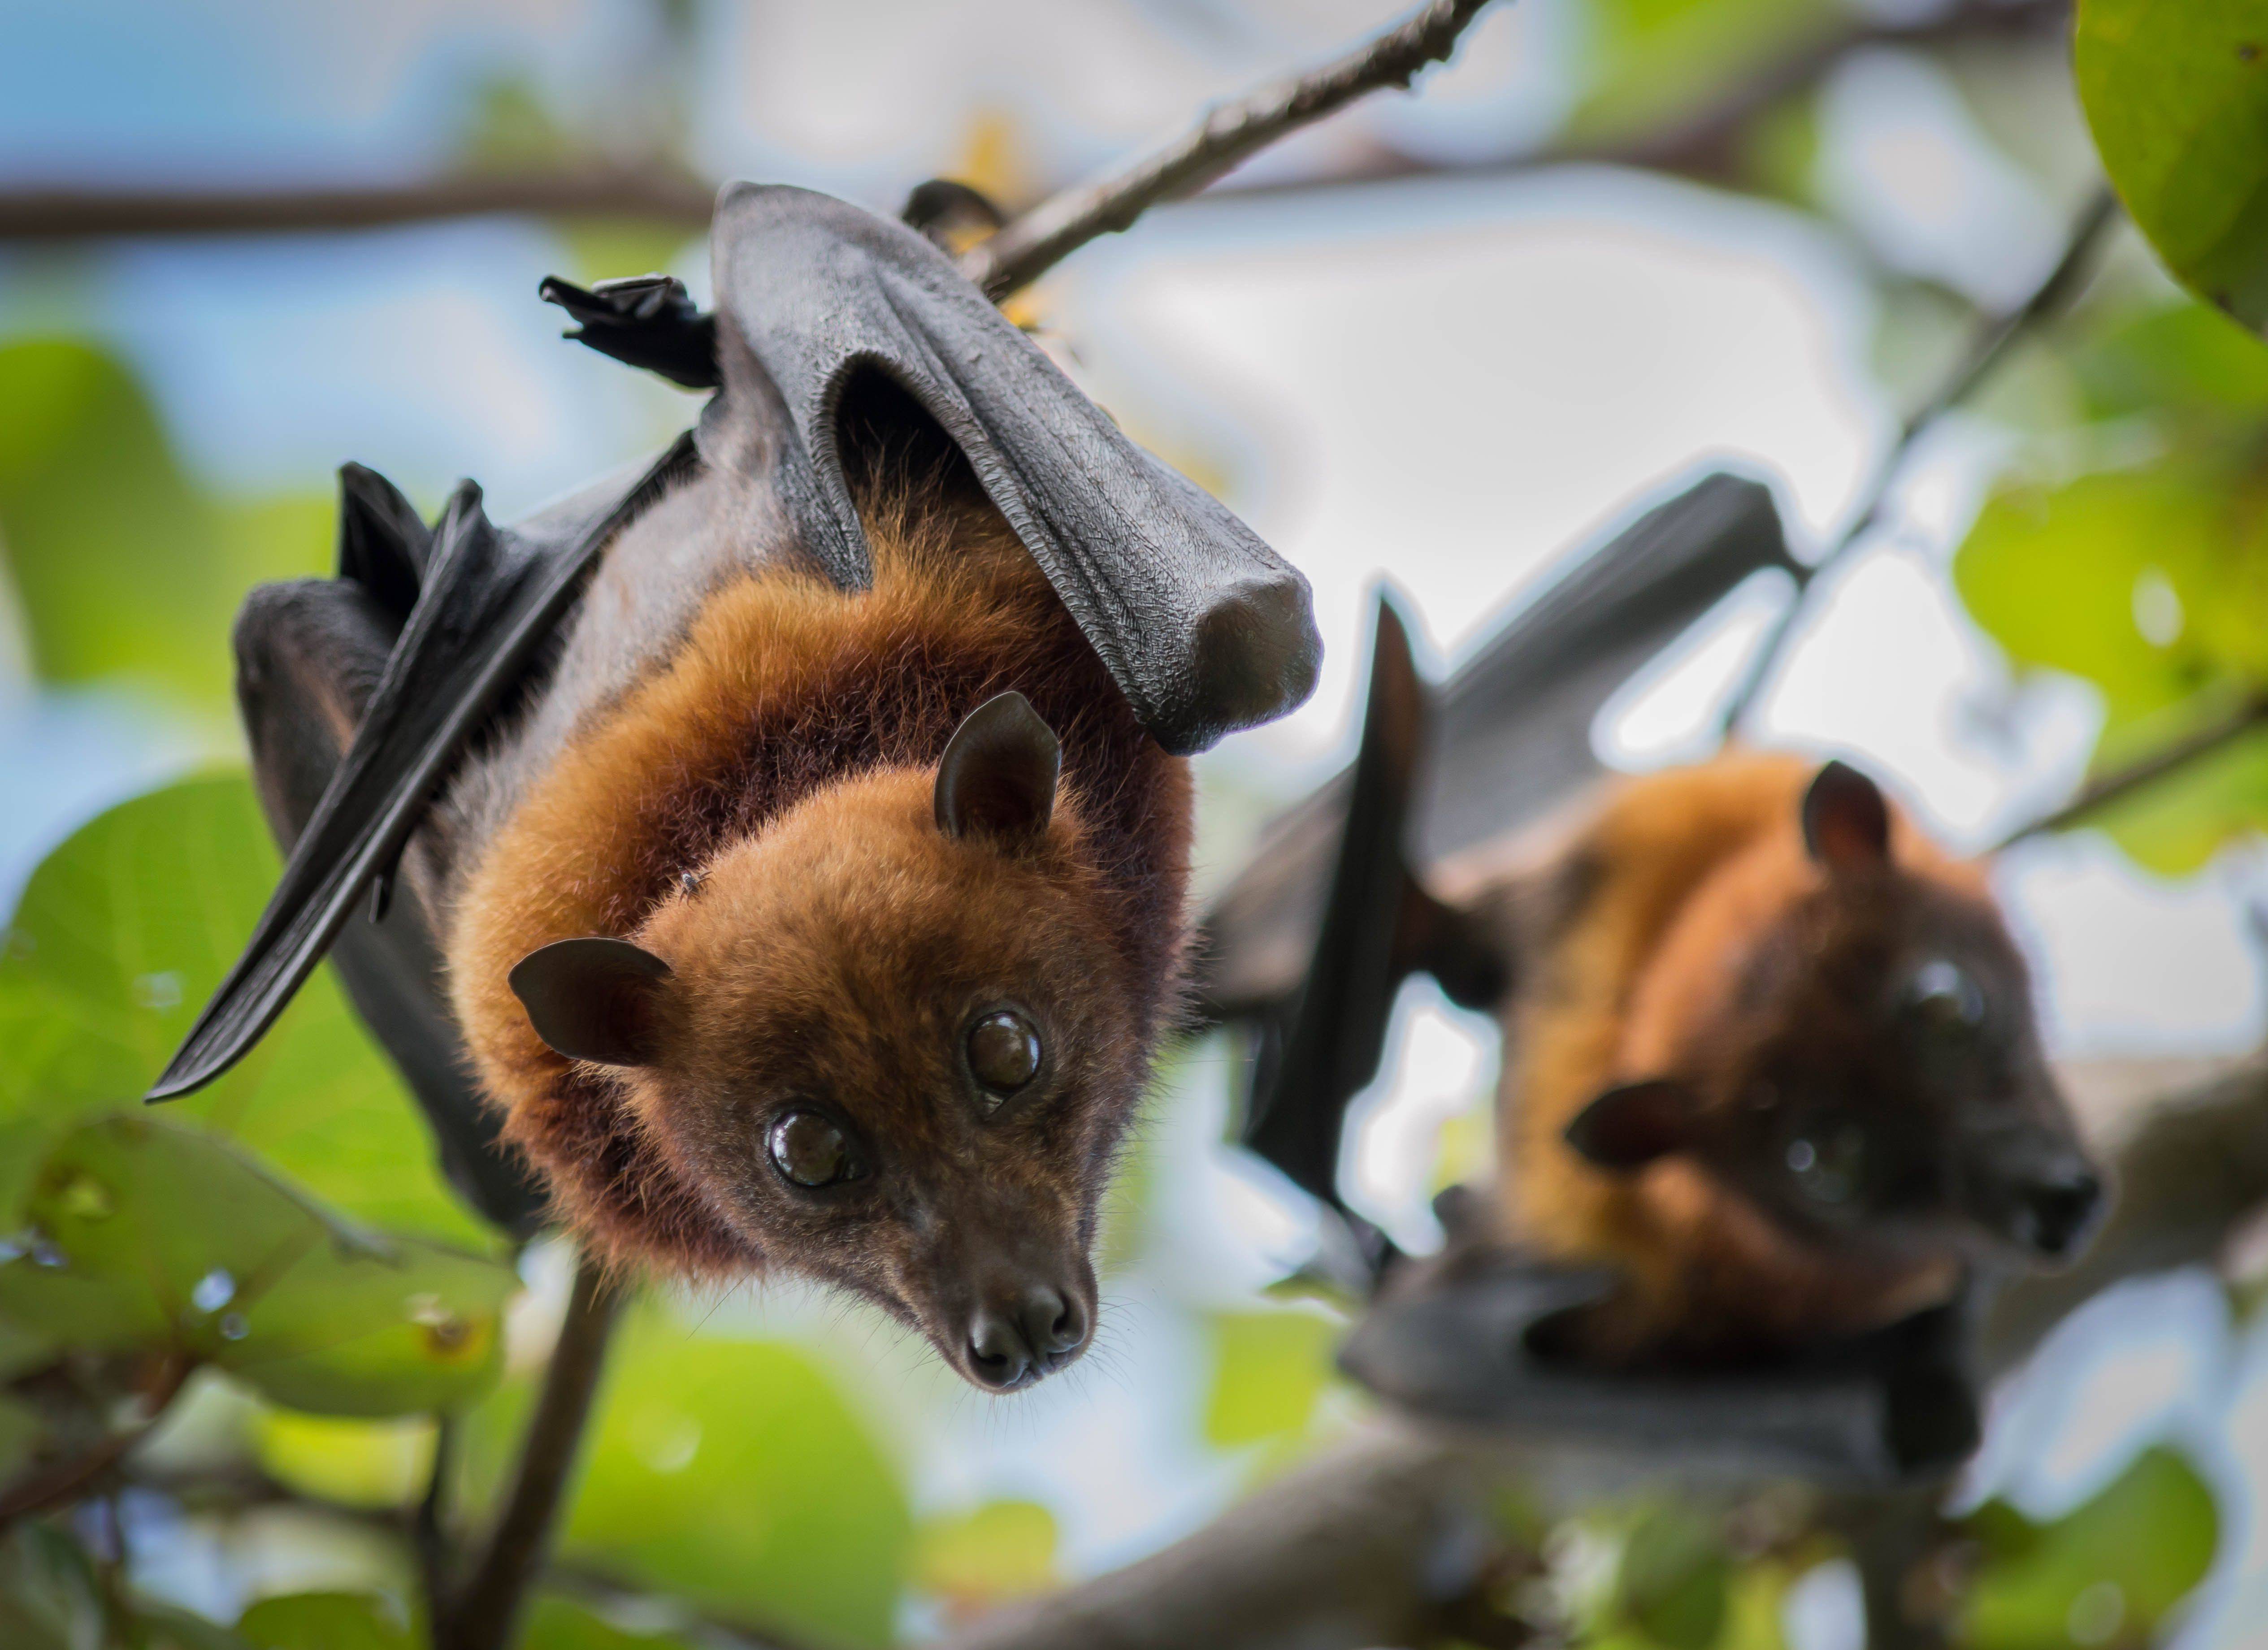 Bats save us billions of dollars a year